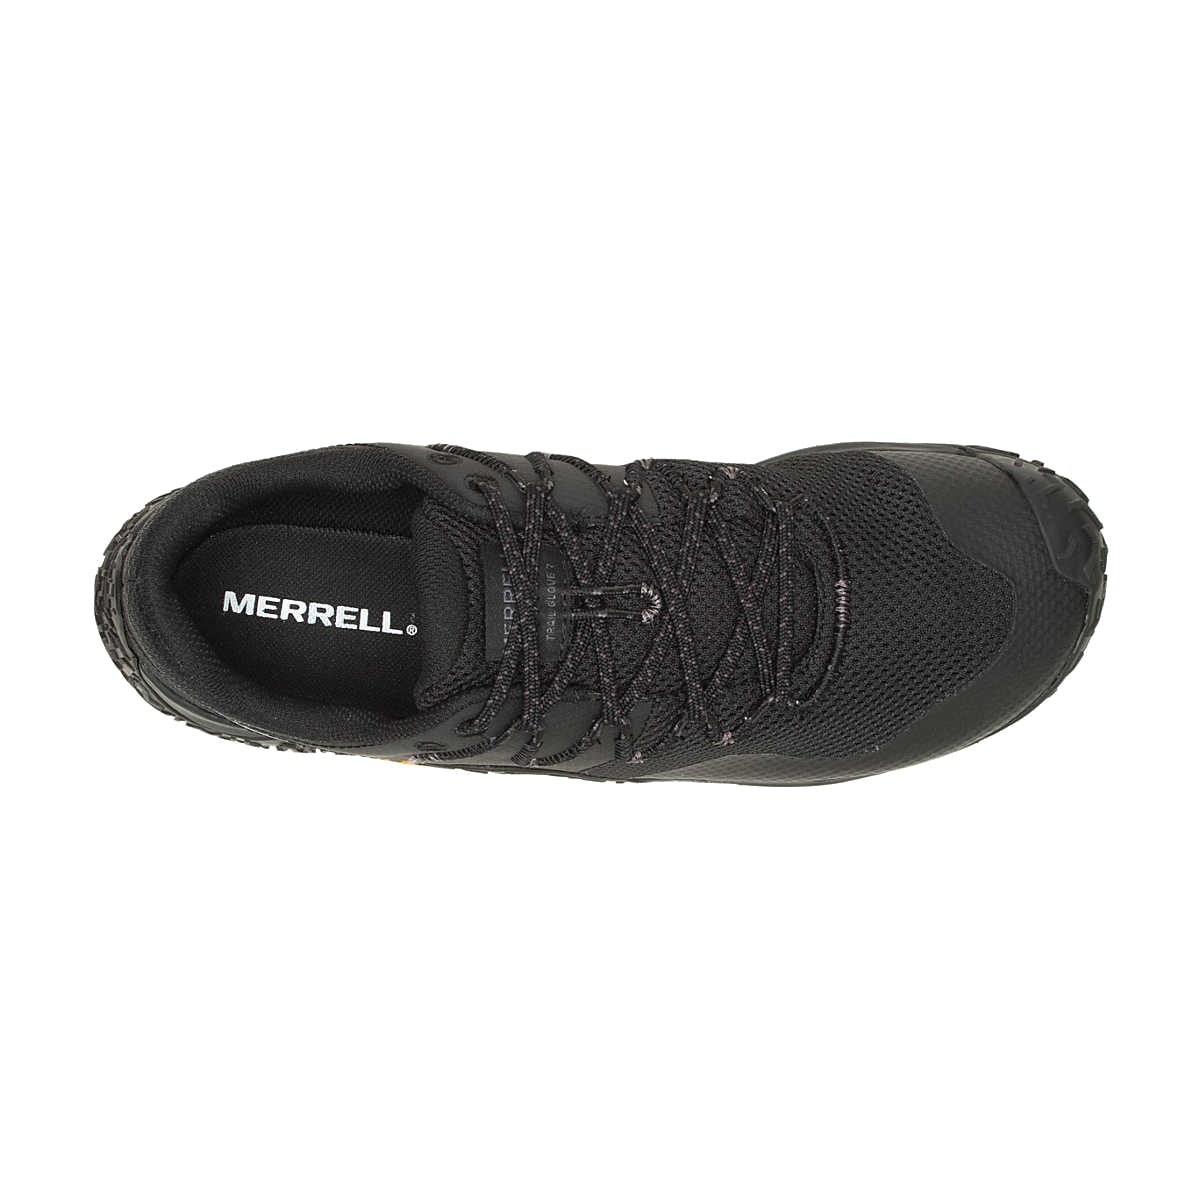 Merrell Men's Trail Glove 7 Sneakers - Black